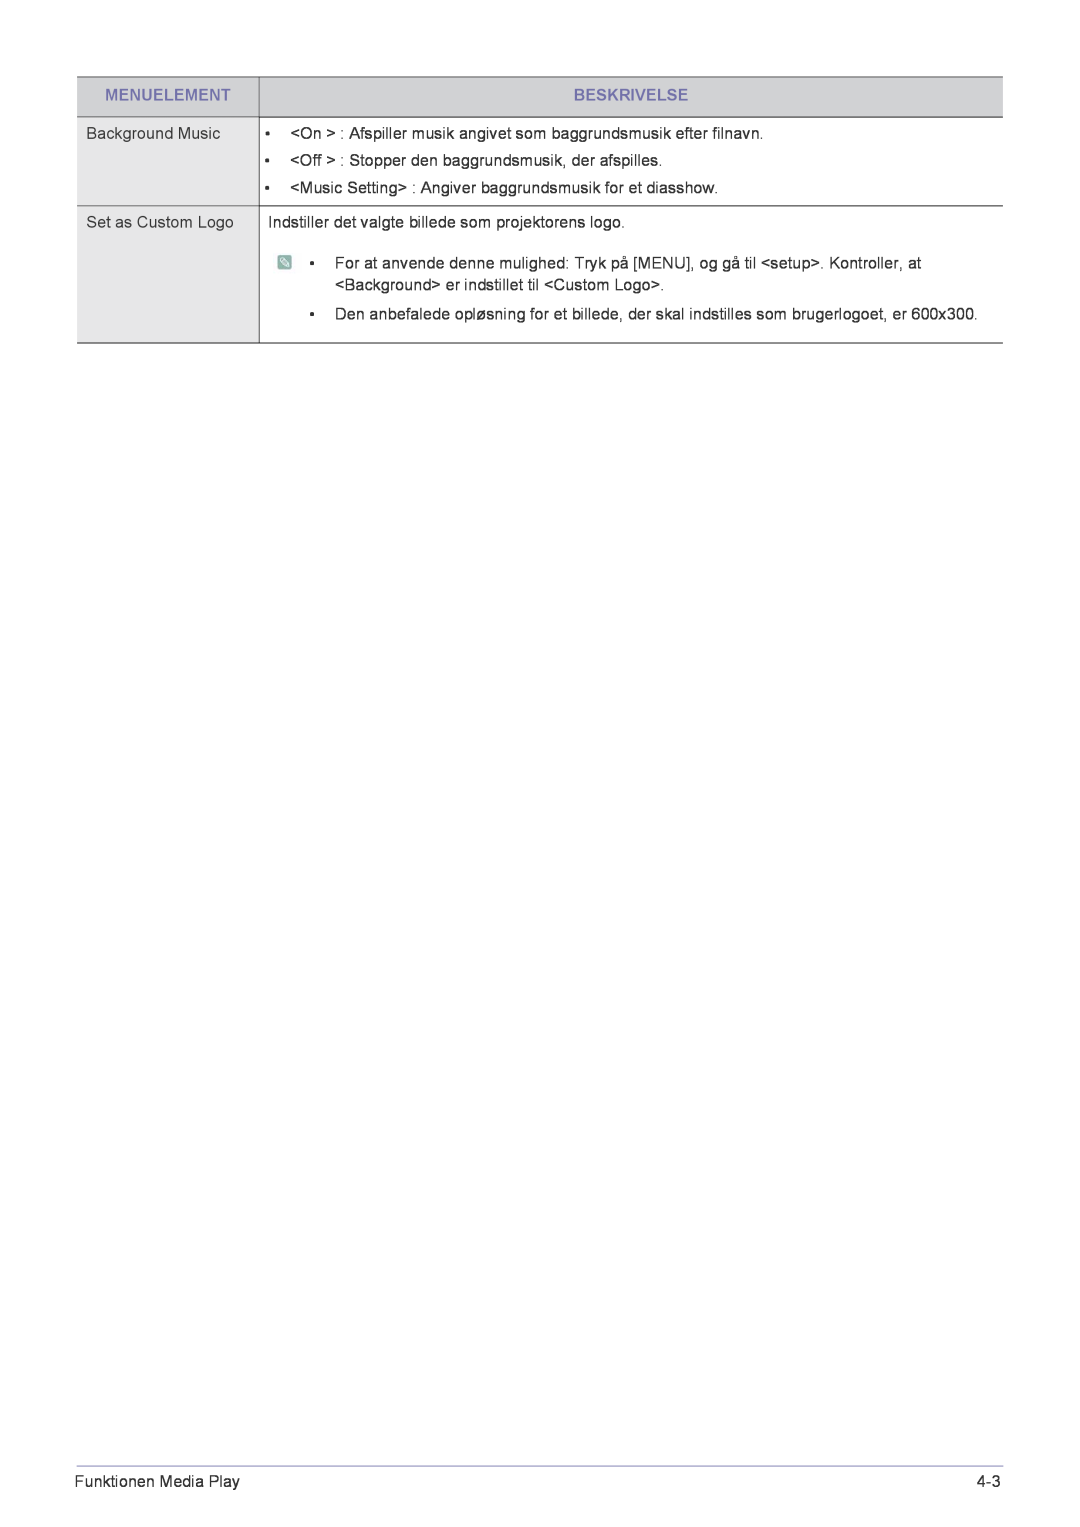 Samsung SP2553XWCX/EN manual Menuelement, Beskrivelse 